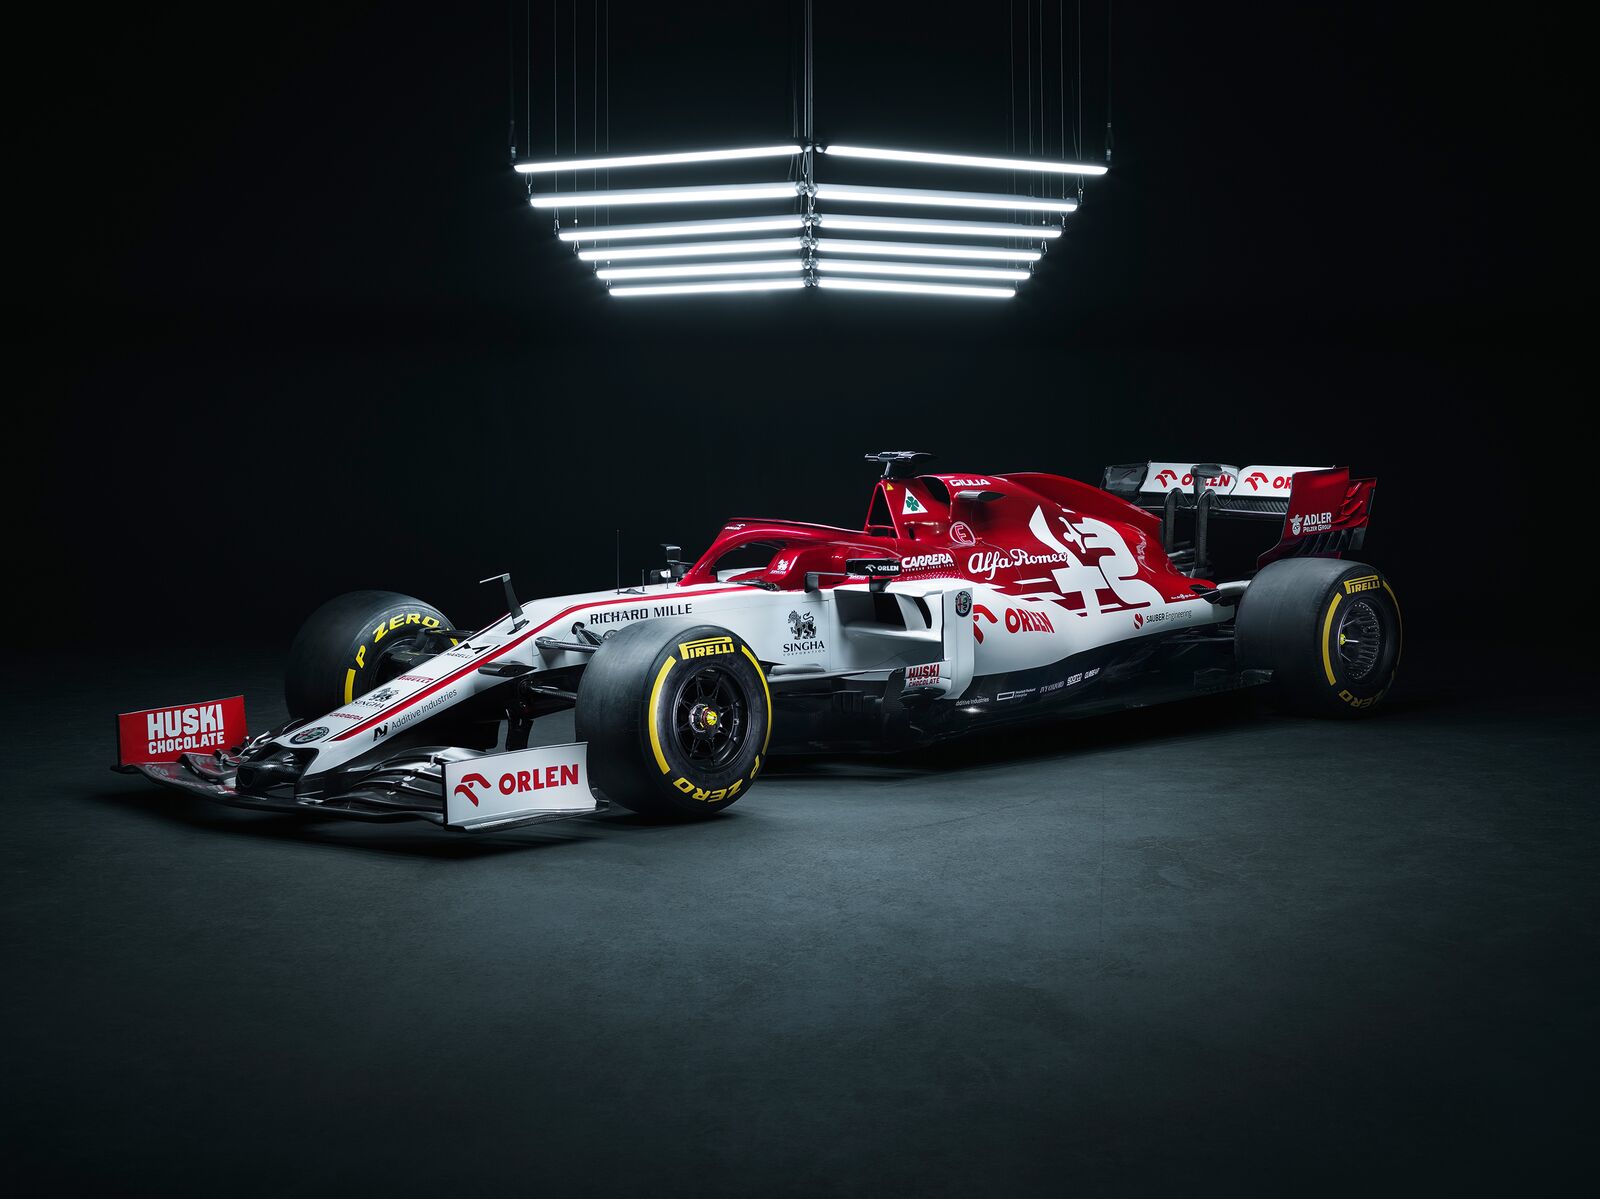 F1 - Alfa Romeo présente sa F1 2020 [+photos]